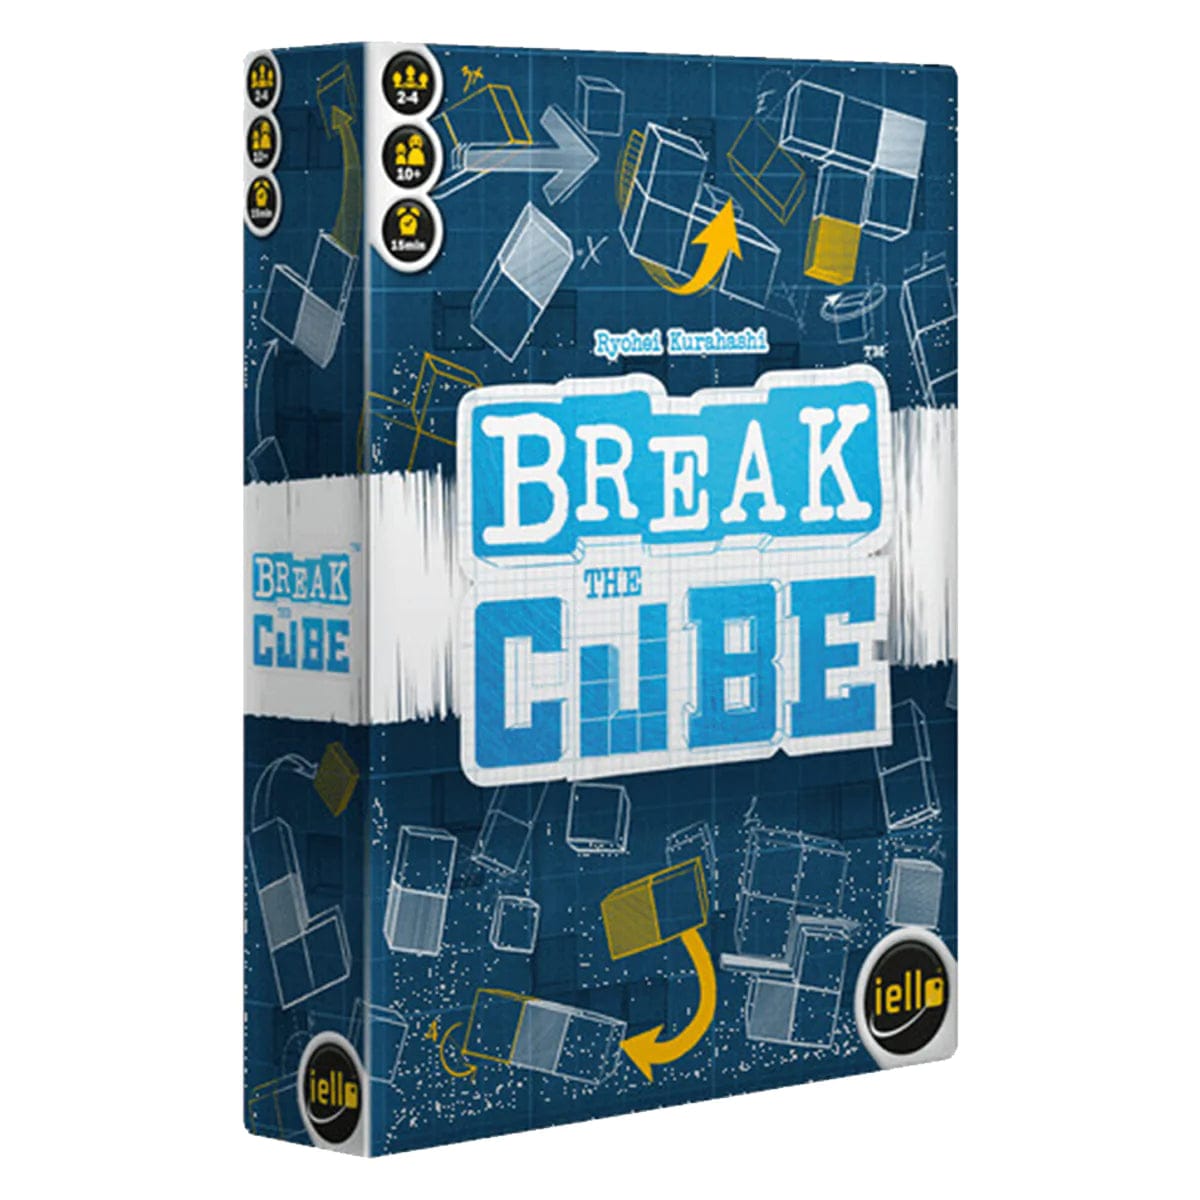 Break The Cube - Third Eye